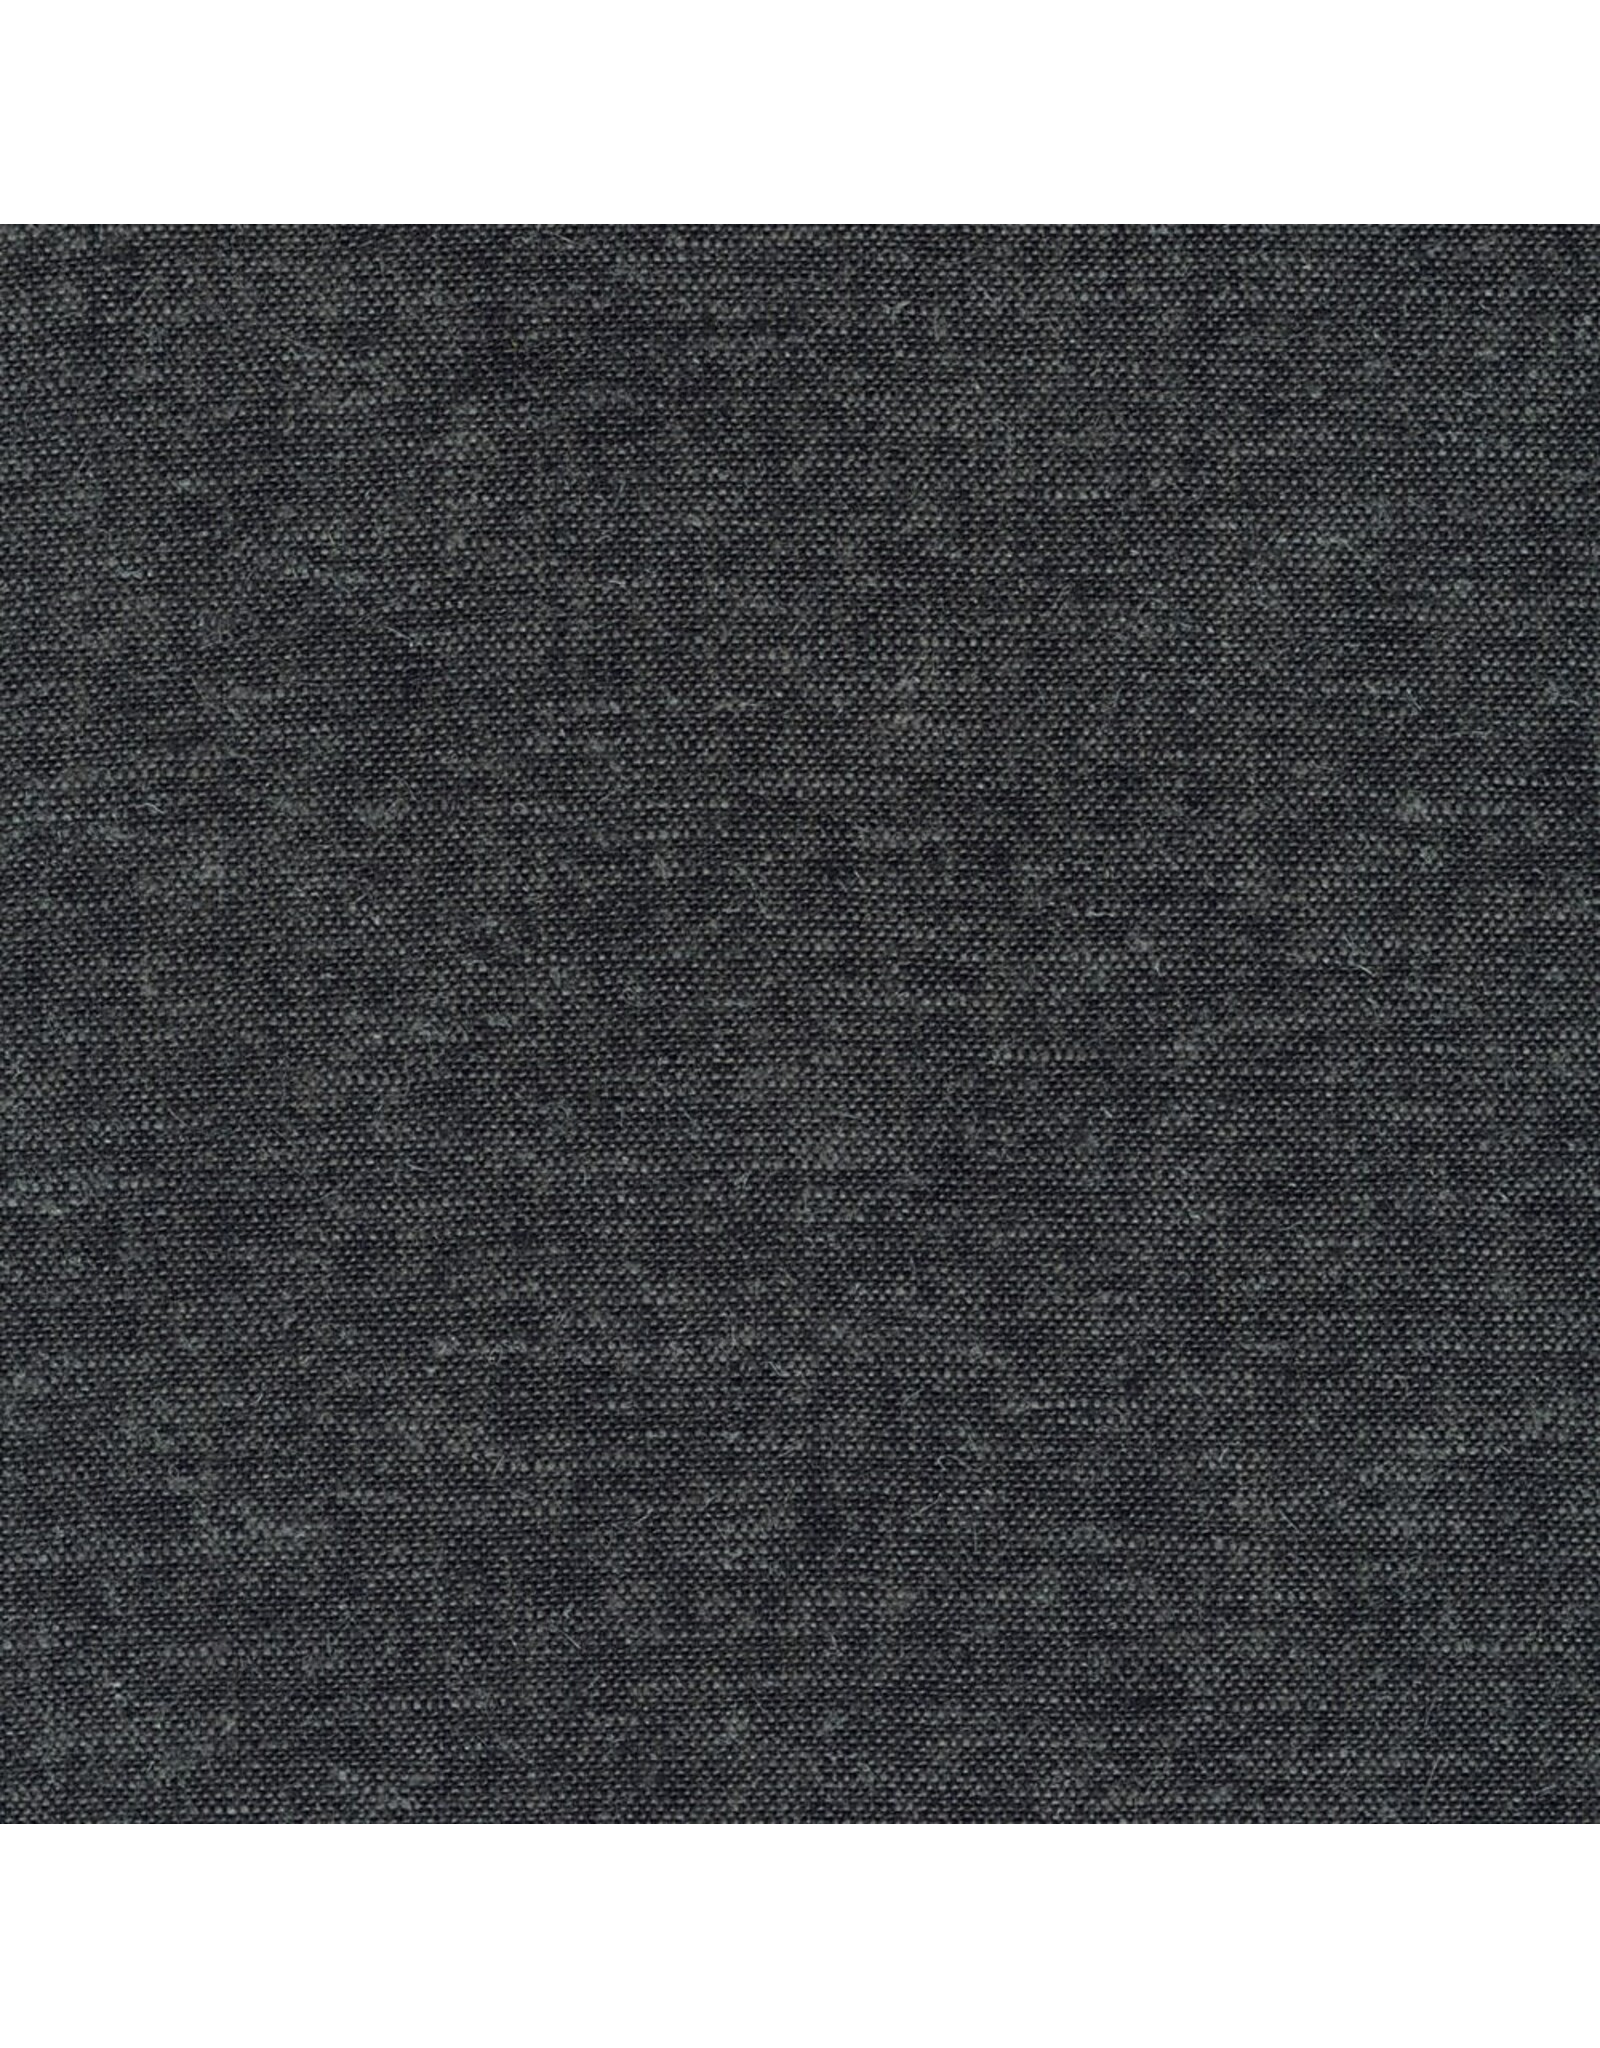 Robert Kaufman Brussels Washer Yarn Dye in Onyx, Linen Rayon Blend, Fabric Half-Yards